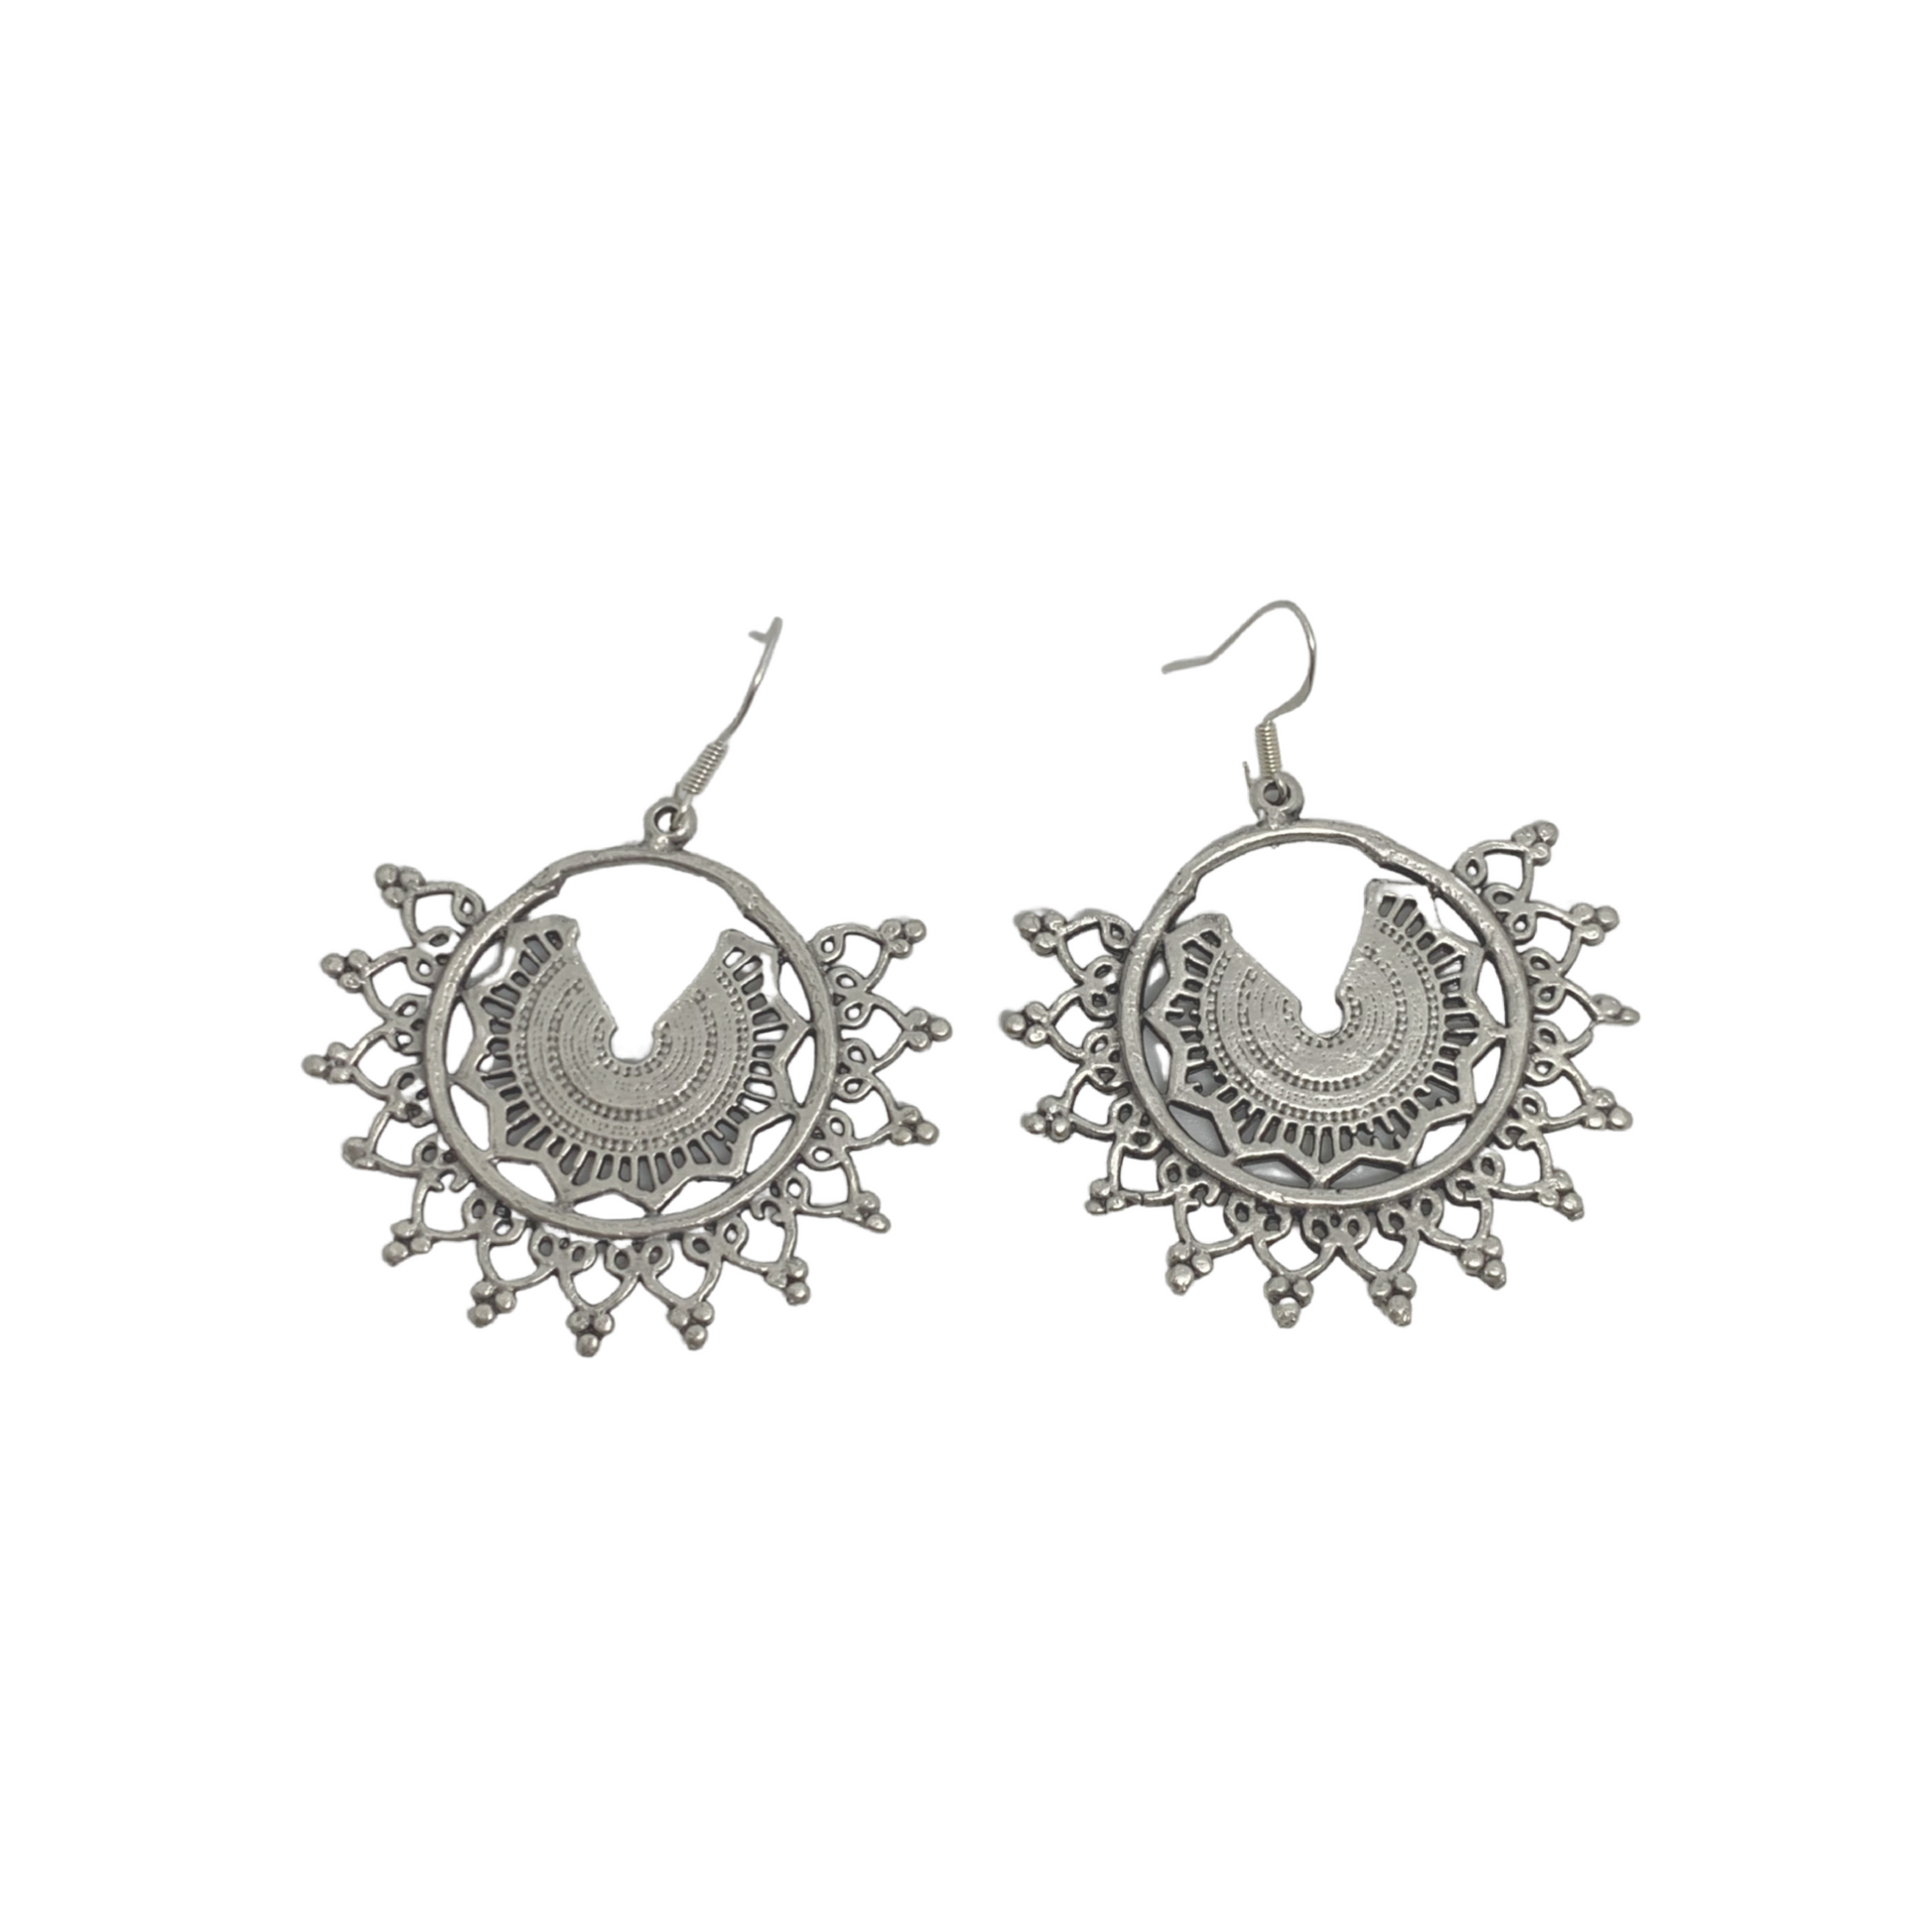 Boho hearts. Sterling silver hoop earrings, jewelry. - Andria Bieber Designs 